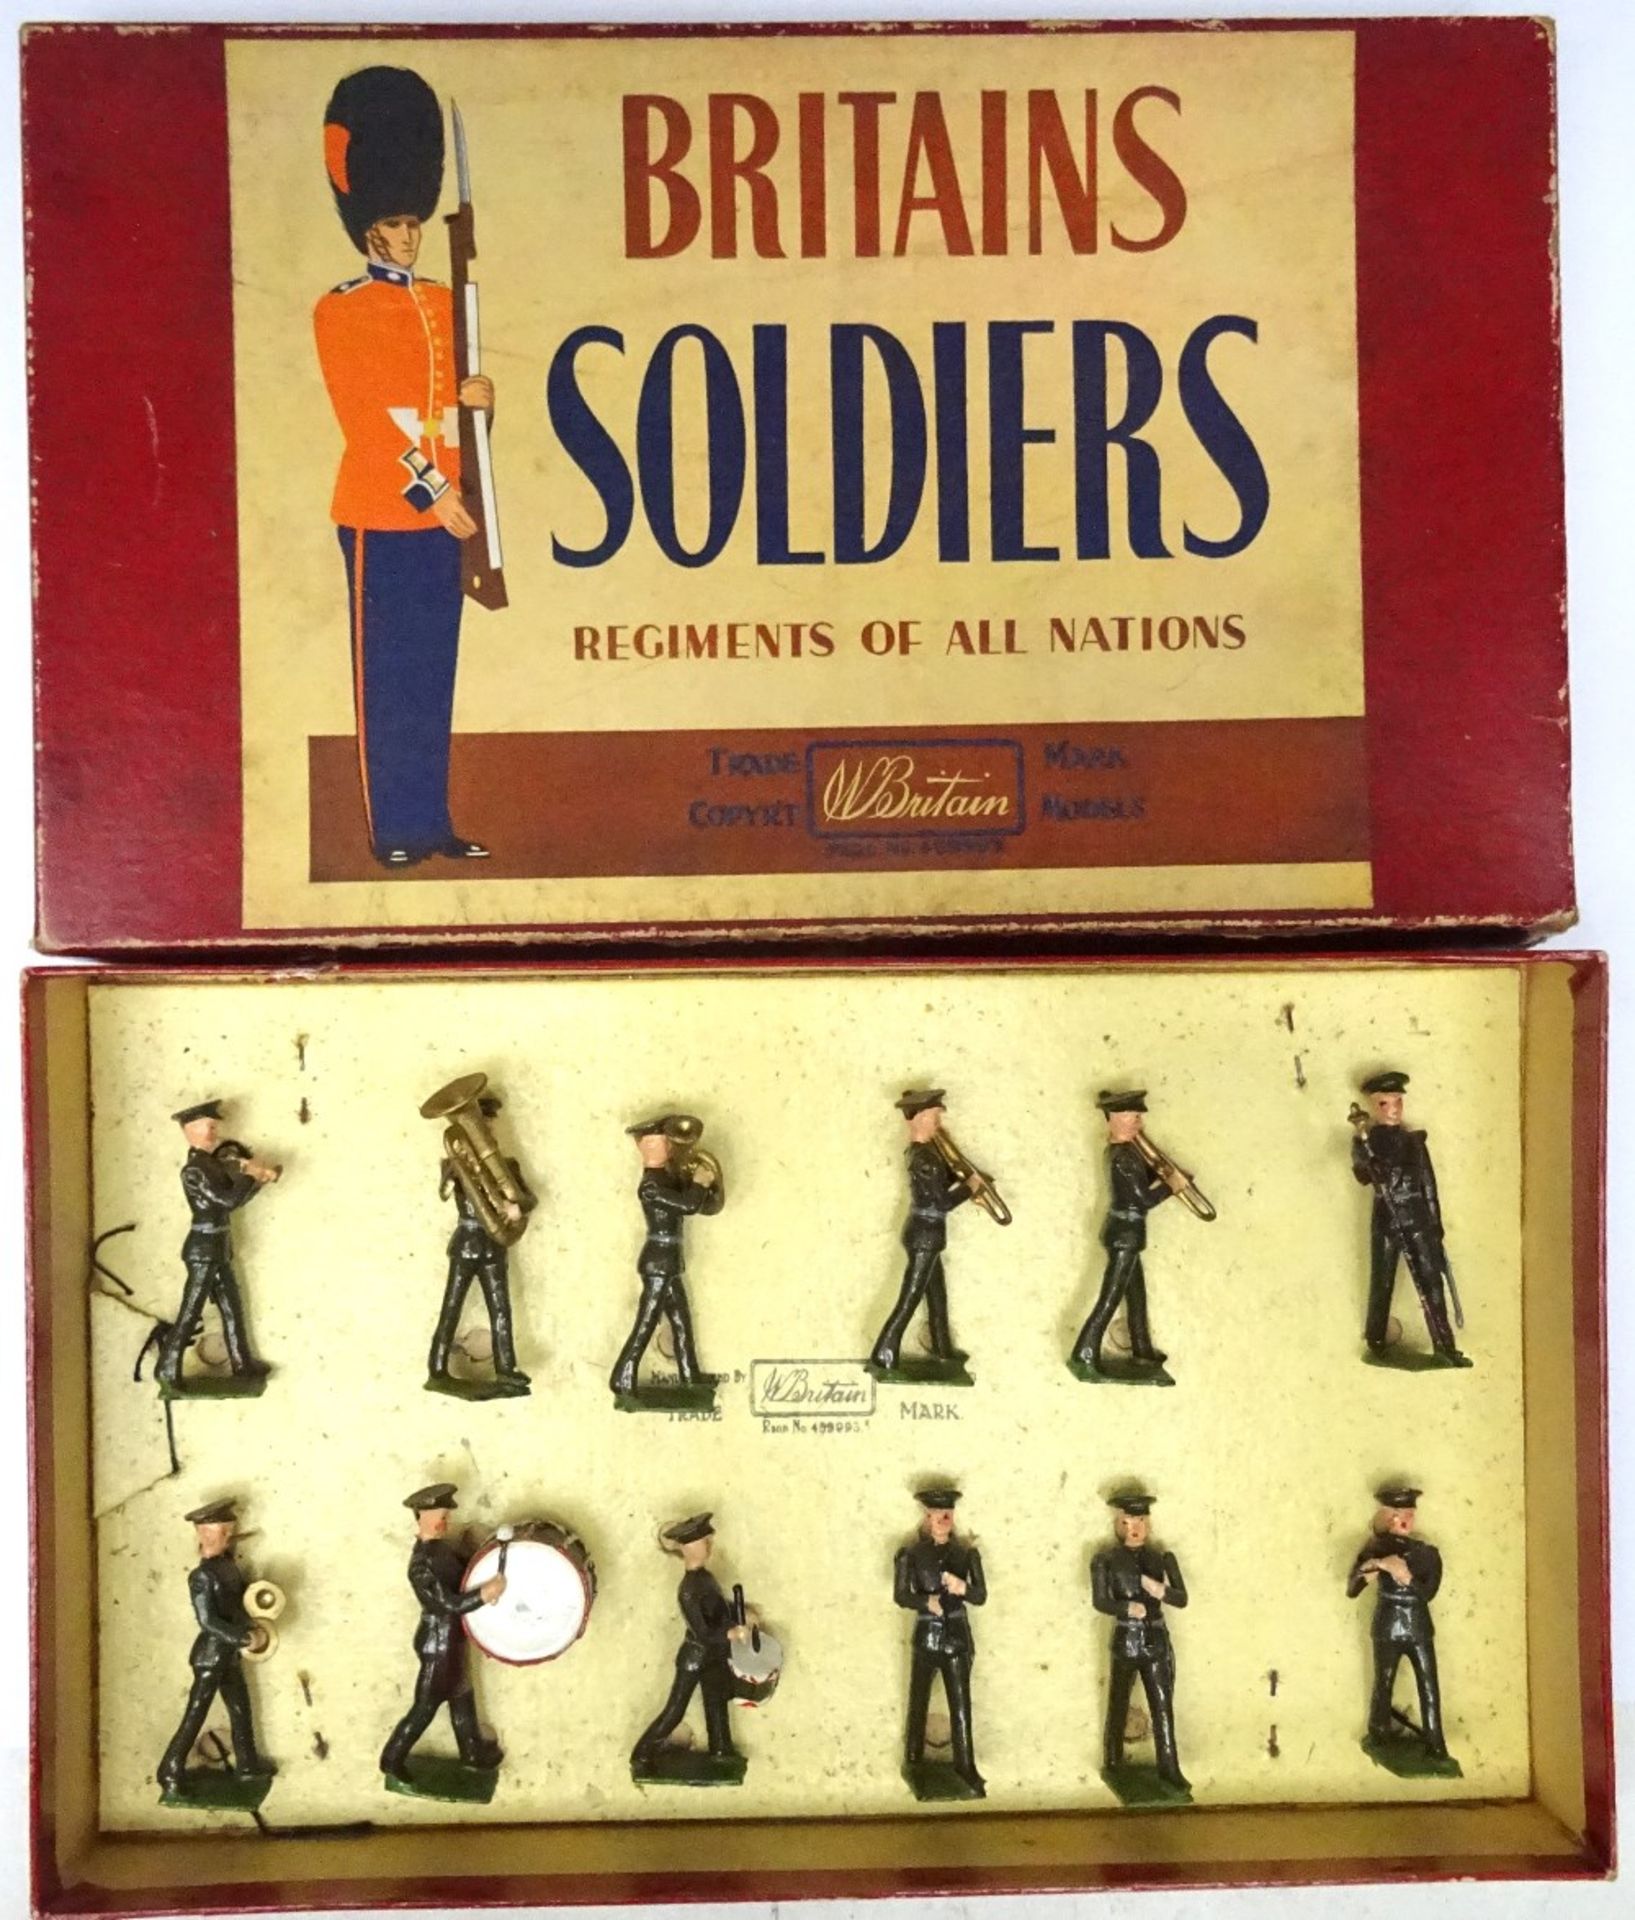 Britains set 1301, USA Military Band